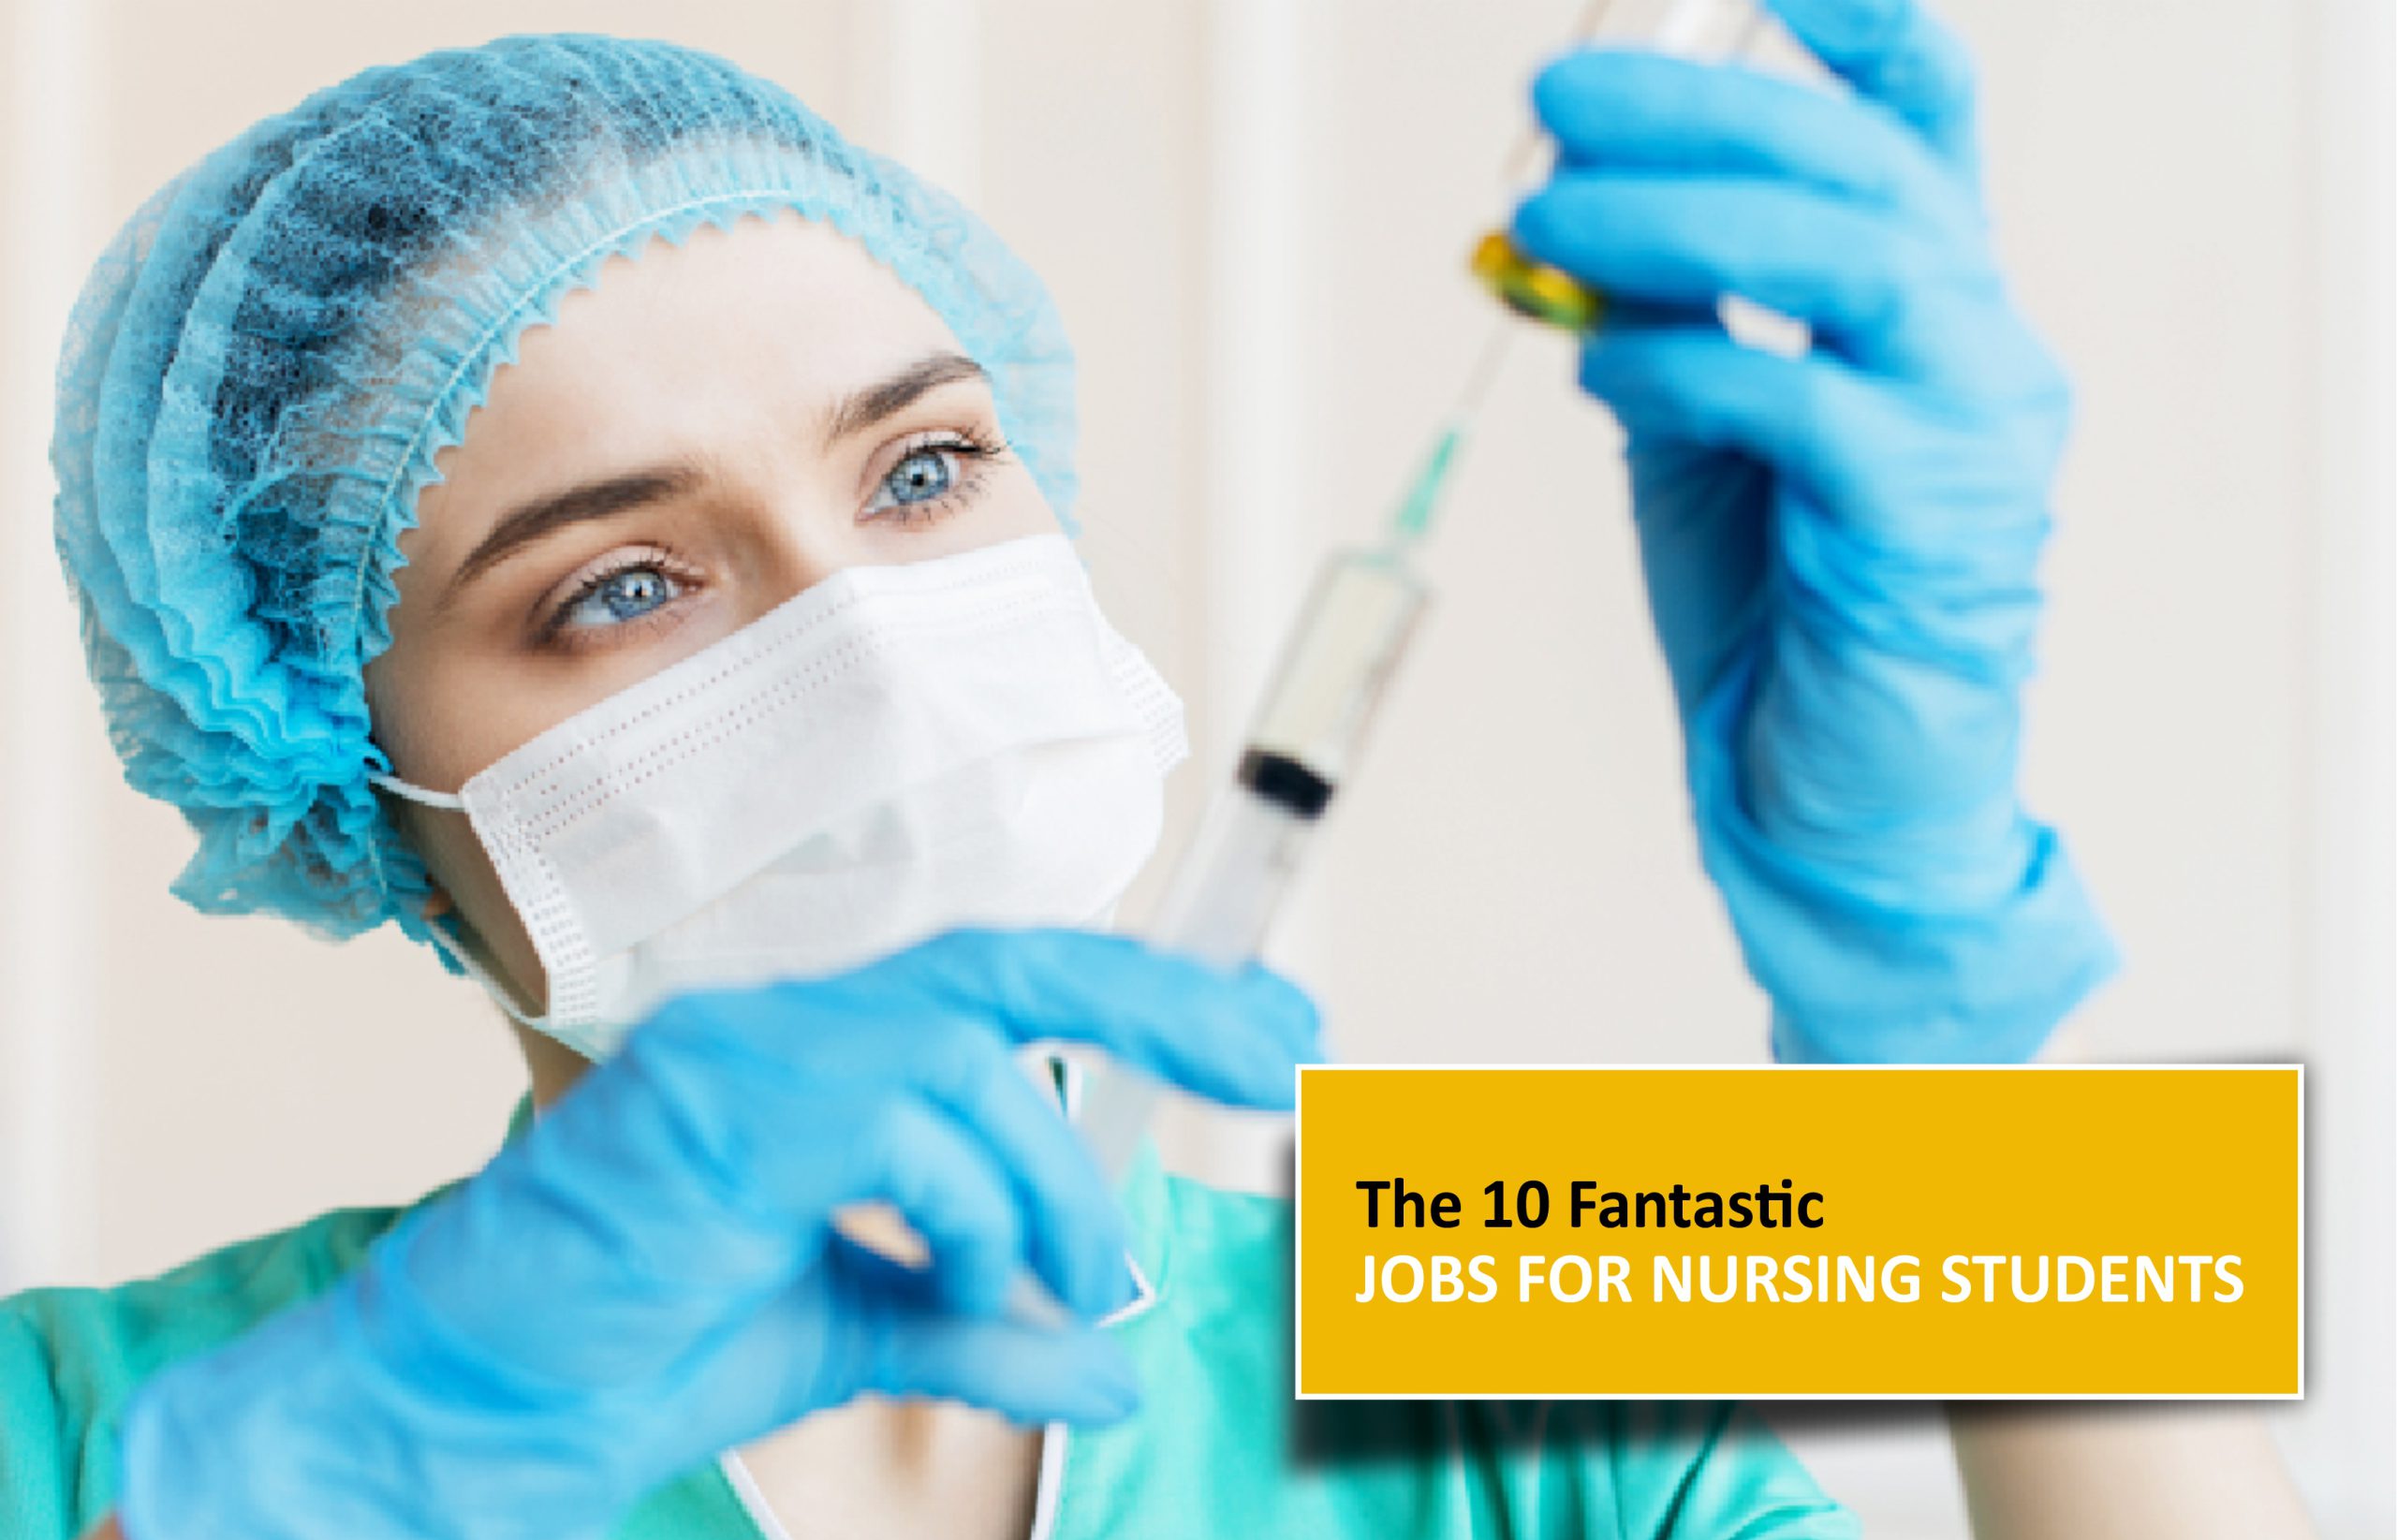 The 10 Fantastic Jobs for Nursing Students